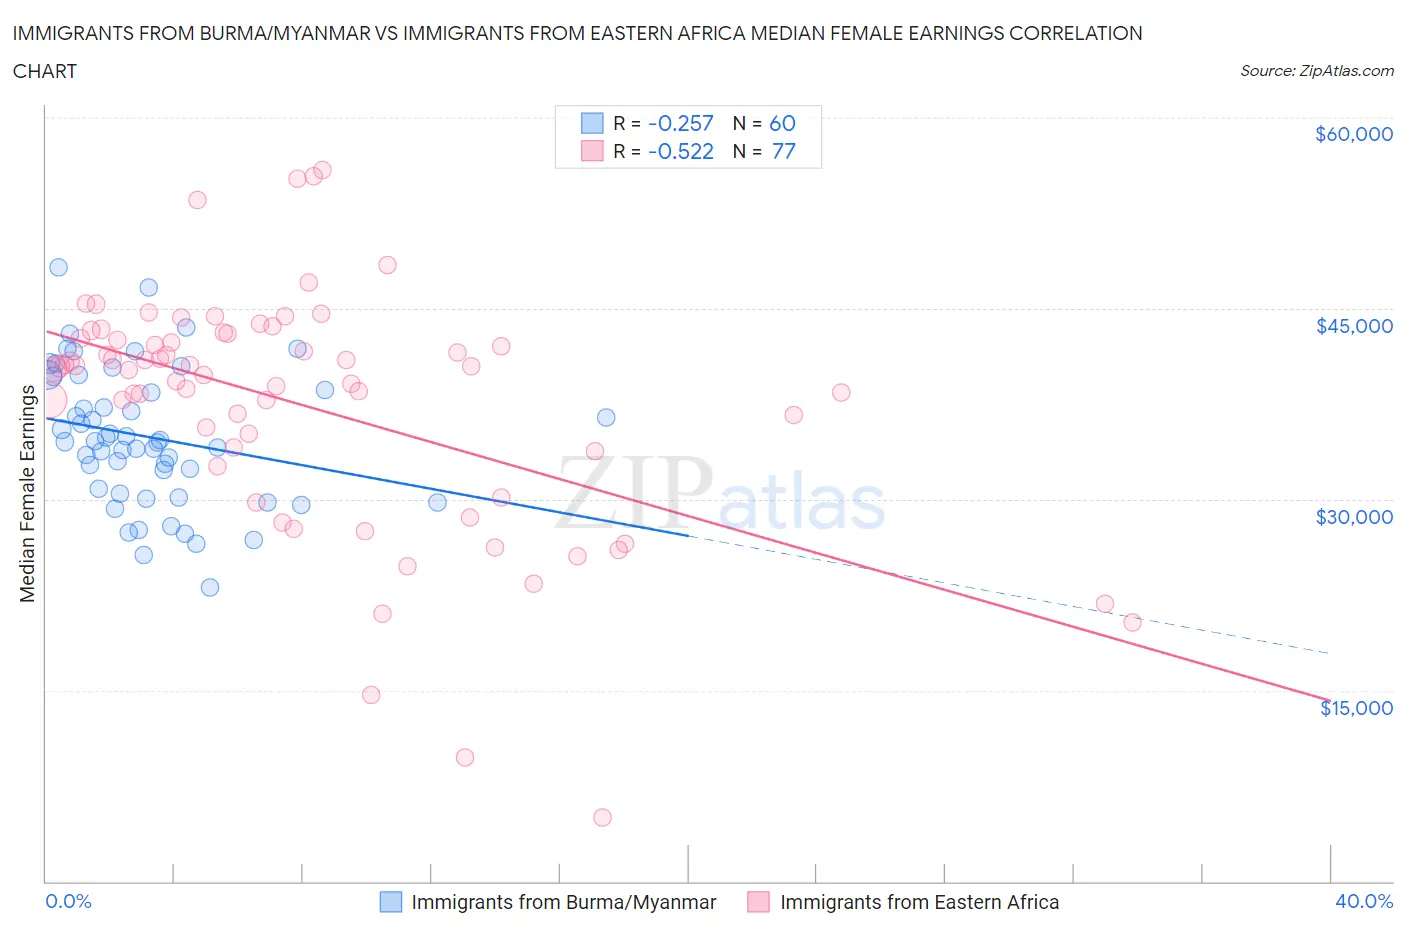 Immigrants from Burma/Myanmar vs Immigrants from Eastern Africa Median Female Earnings